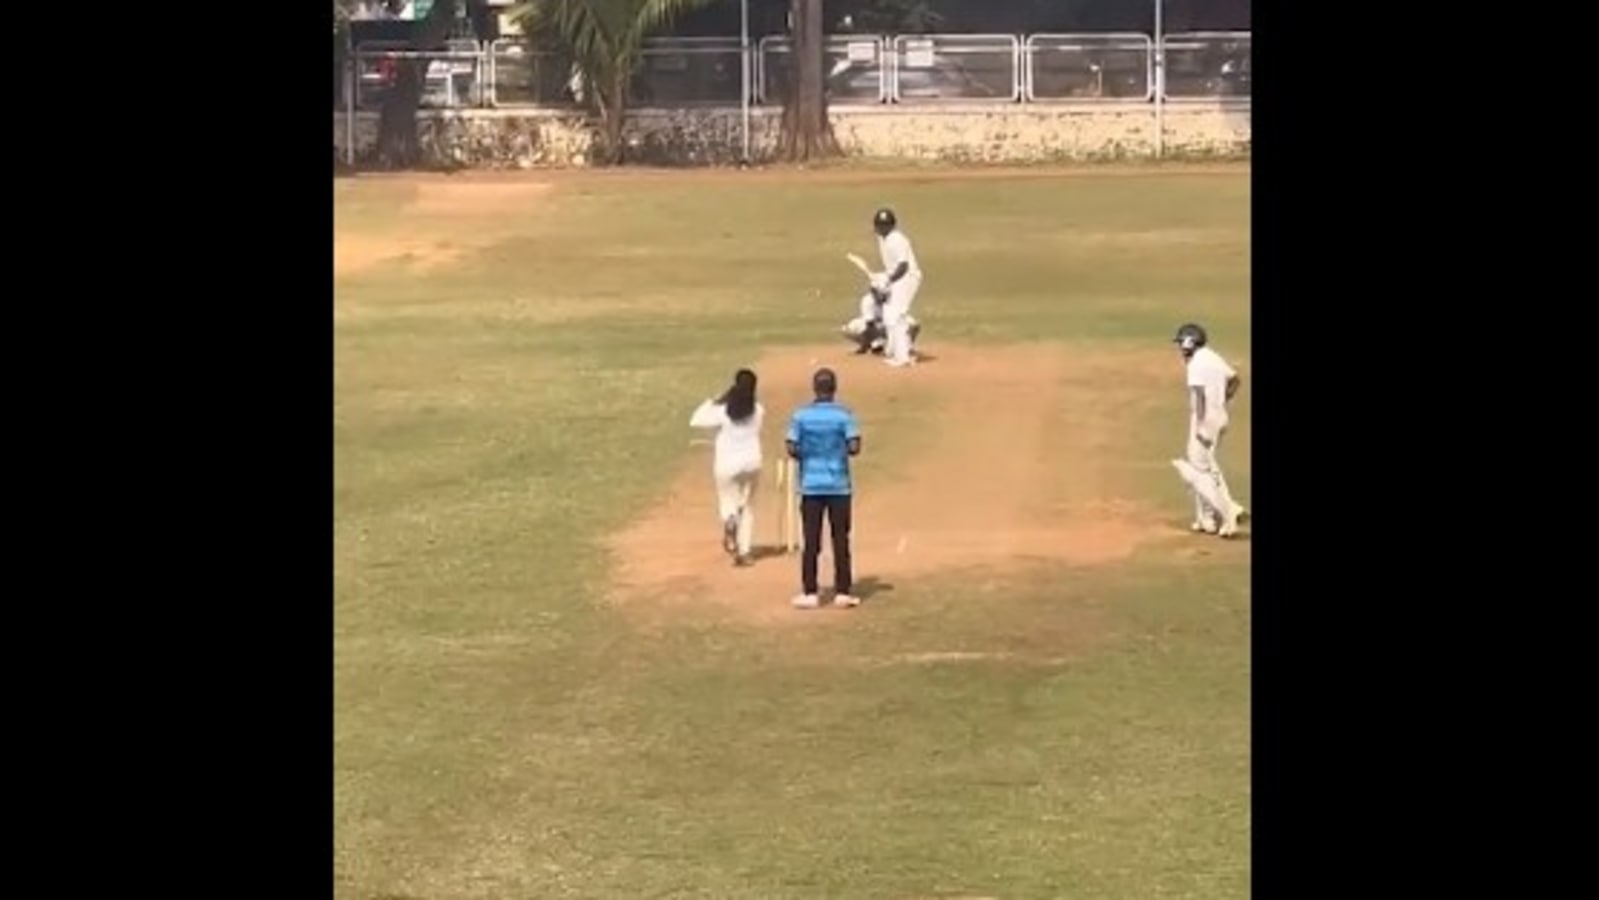 Sachin Tendulkar shares video of girls, boys playing cricket together in Mumbai Trending